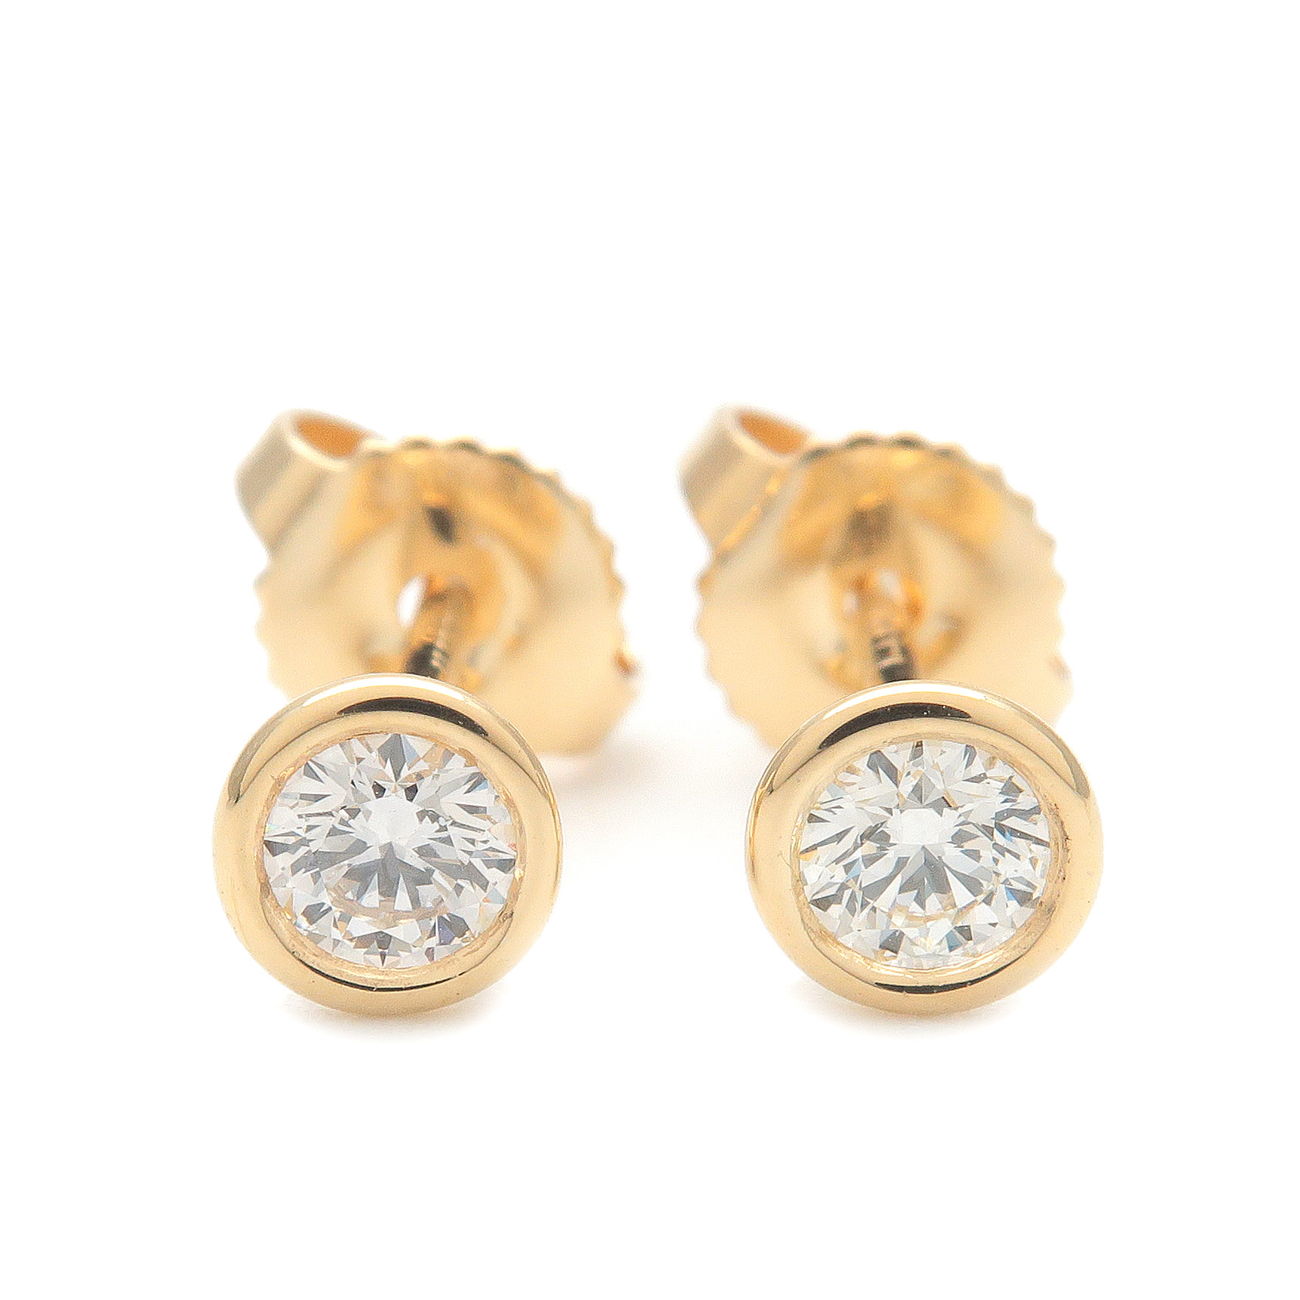 Tiffany&Co.-By-The-Yard-Diamond-Earrings-0.17ctx2-K18YG-750YG